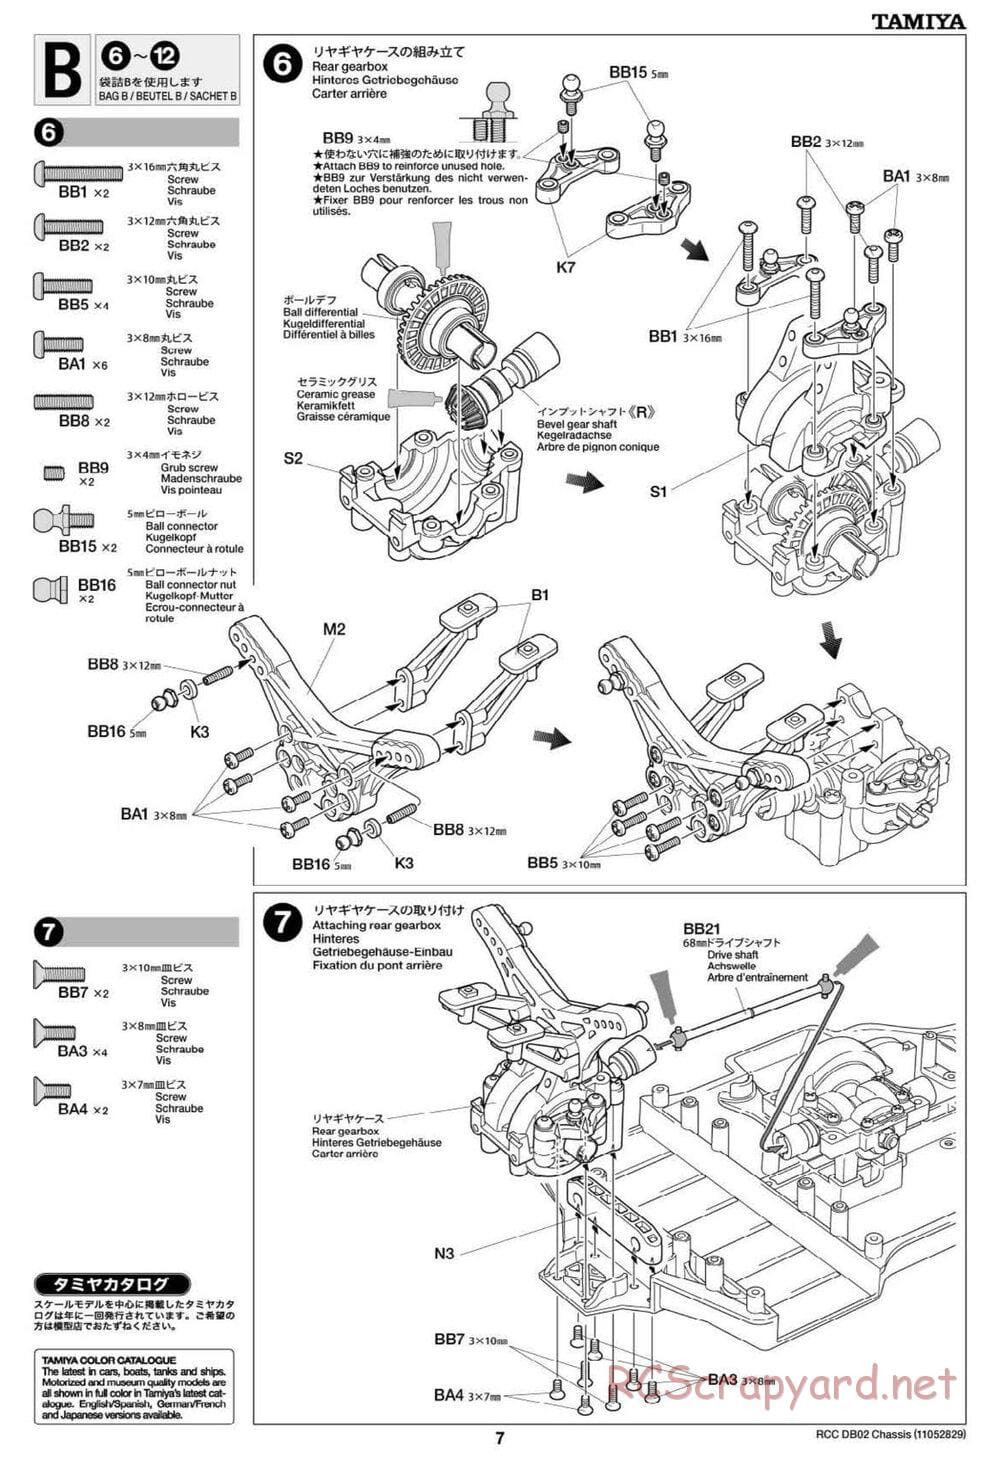 Tamiya - Leonis - DB-02 Chassis - Manual - Page 7